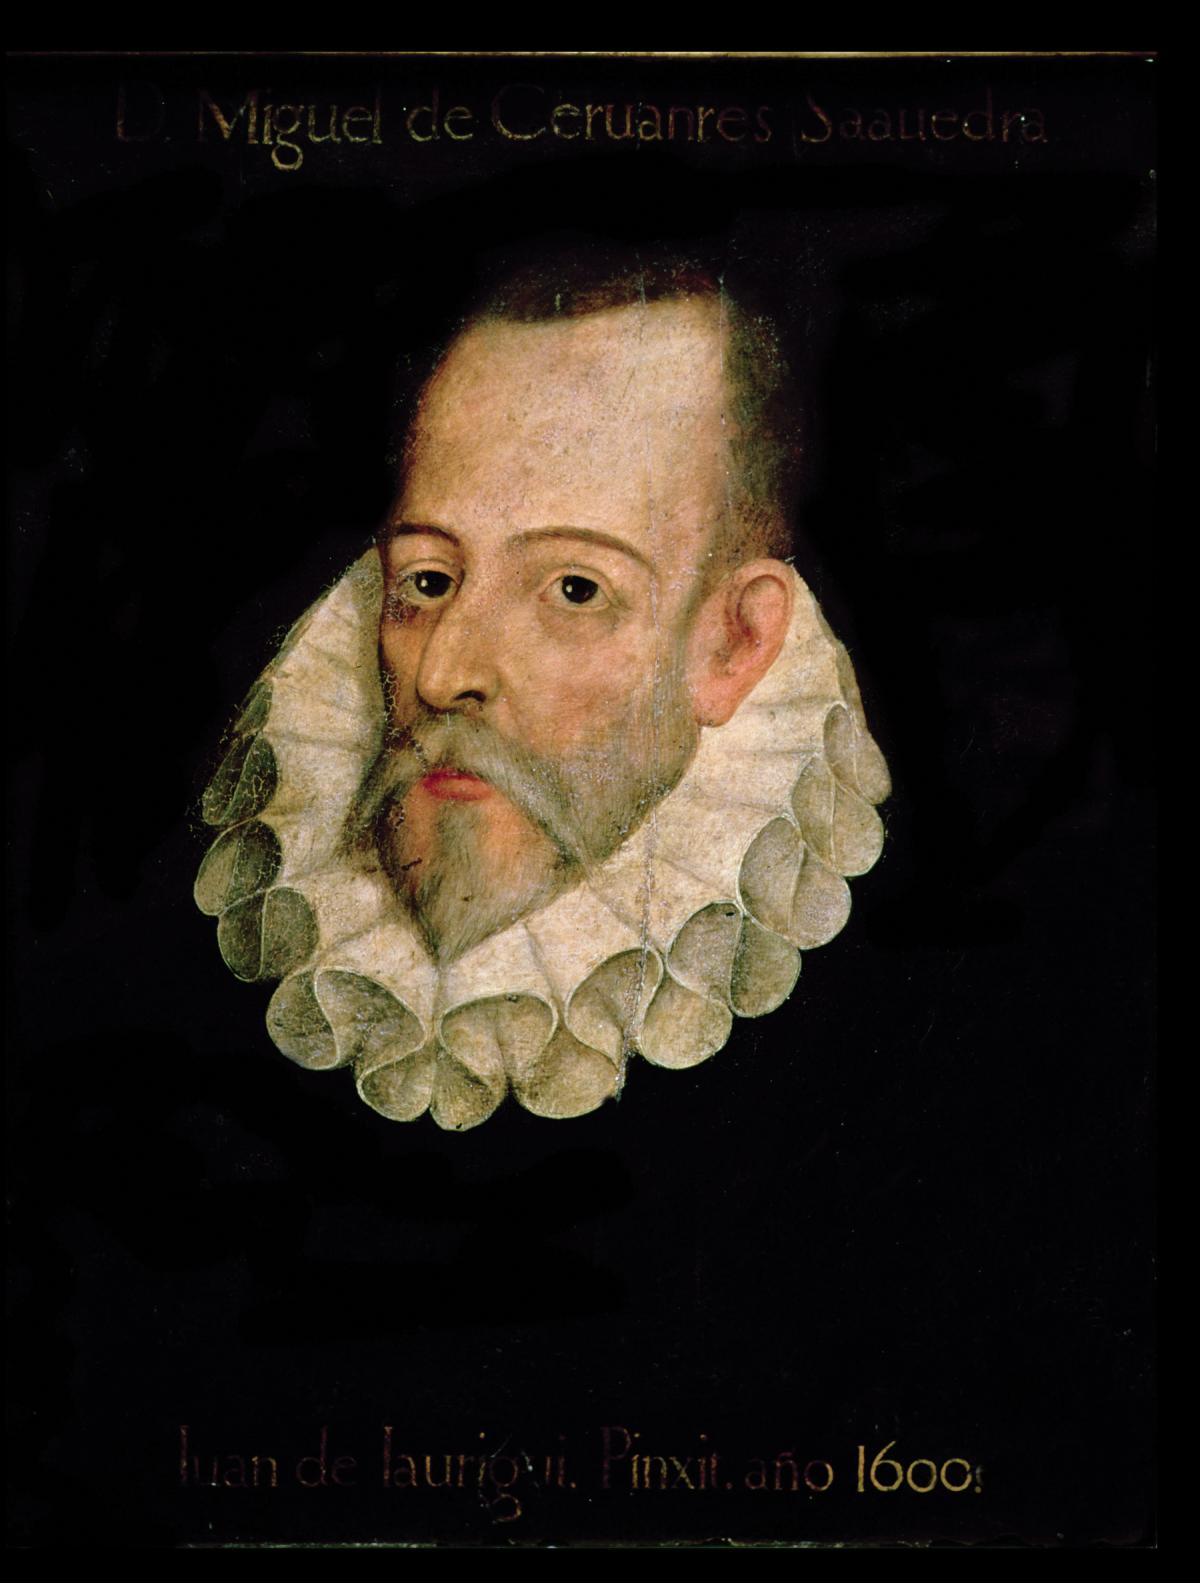 Portrait of Miguel de Cervantes with ruffled collar